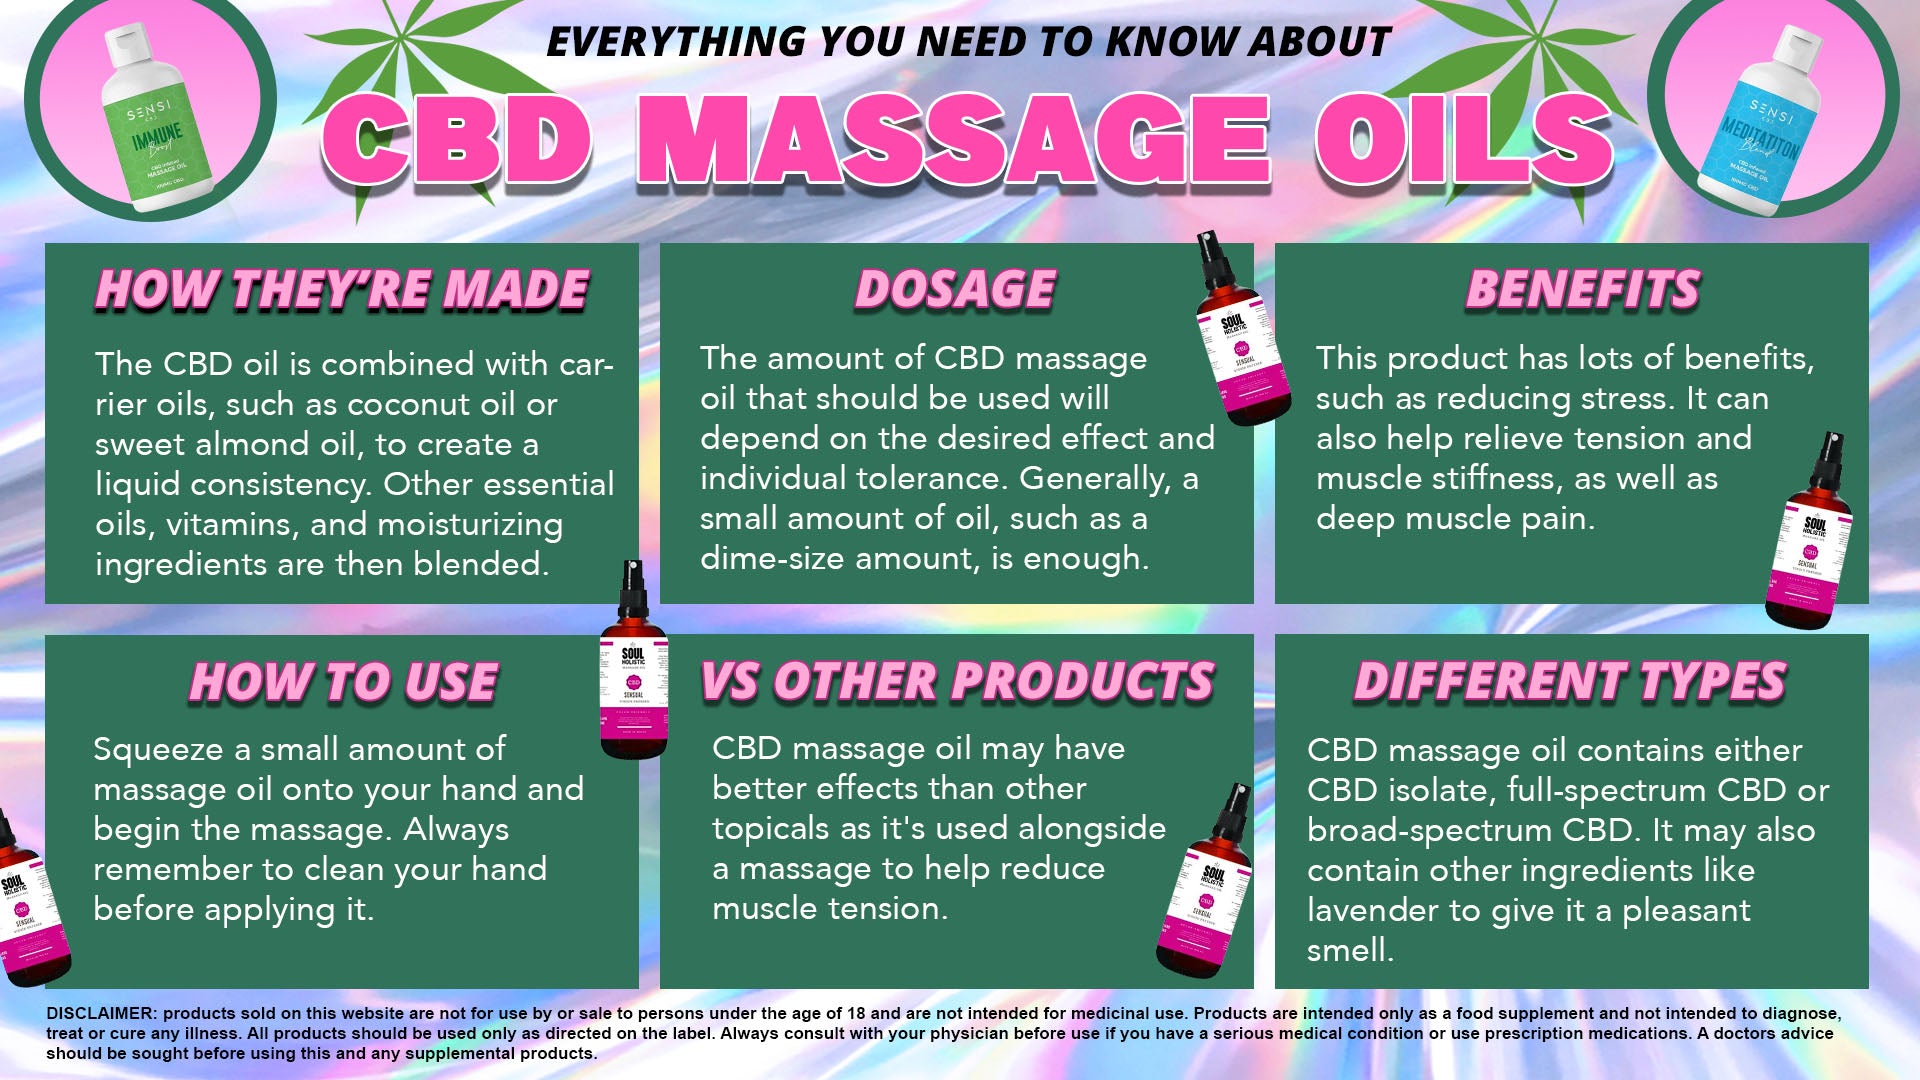 Will I Get High If I Use CBD Massage Oil?